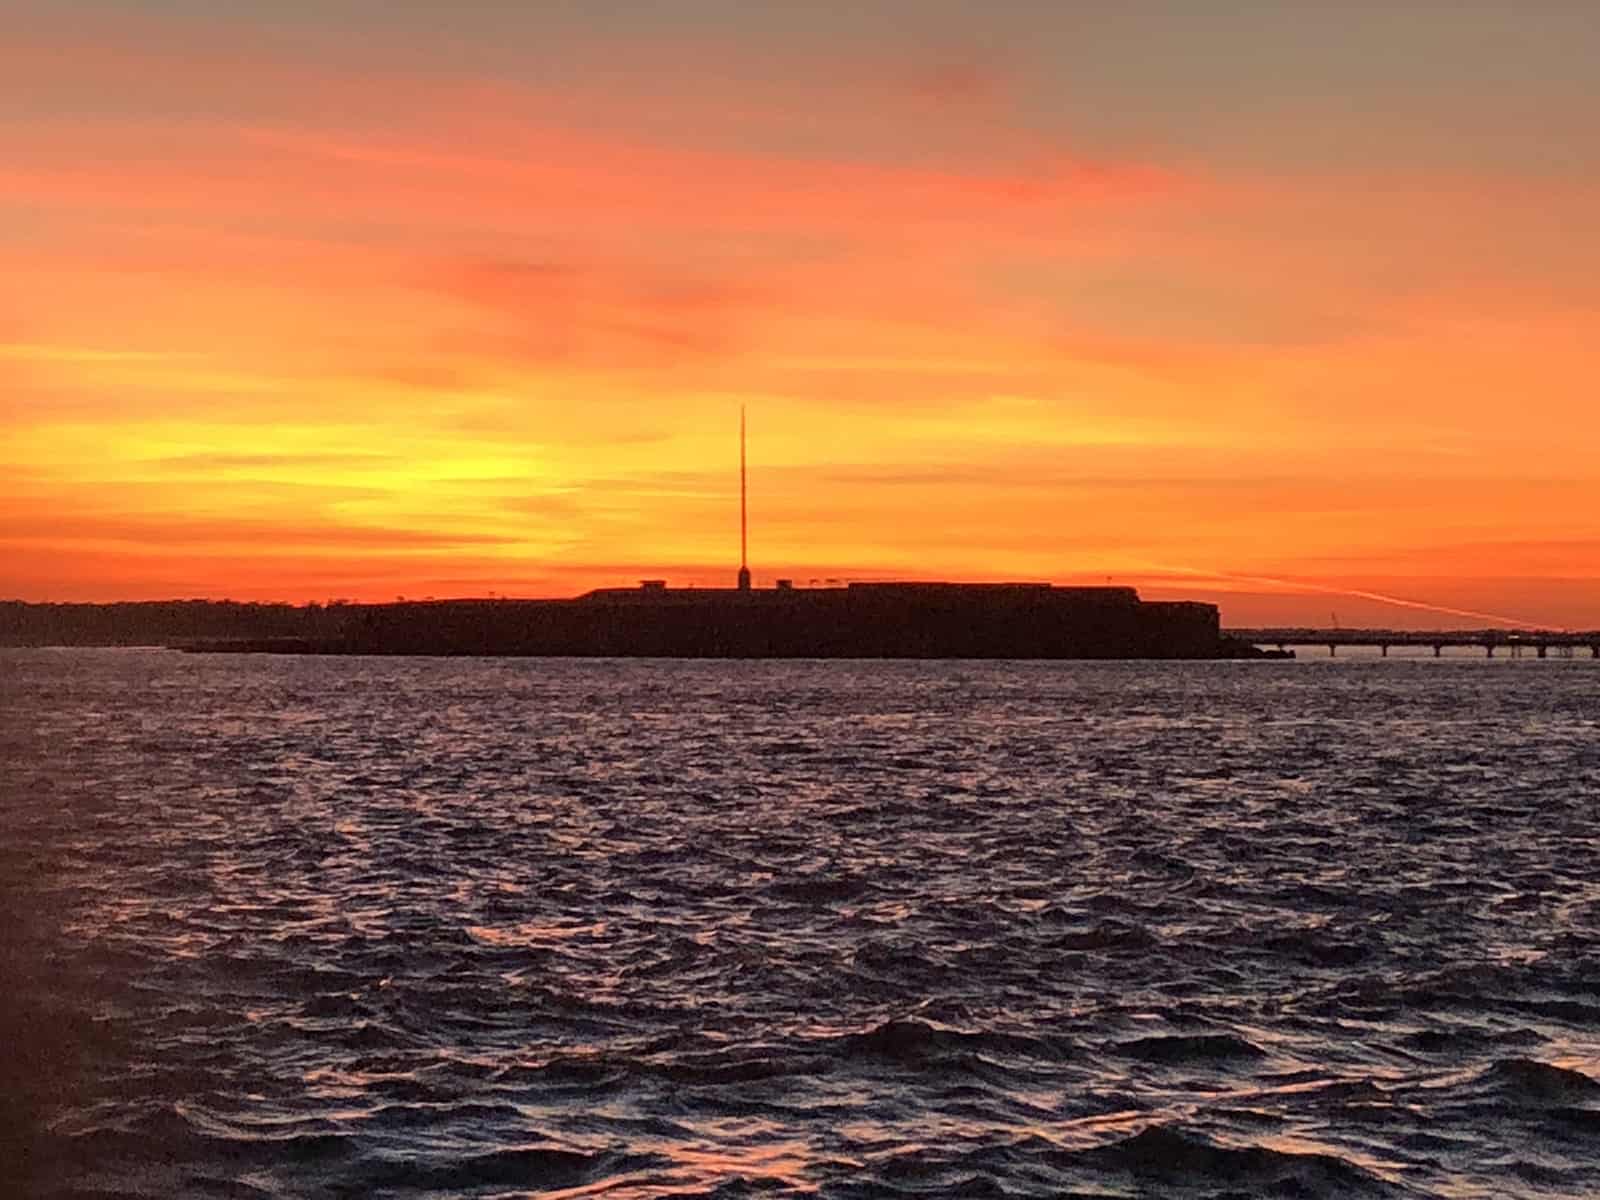 sailboat sunset cruise charleston sc